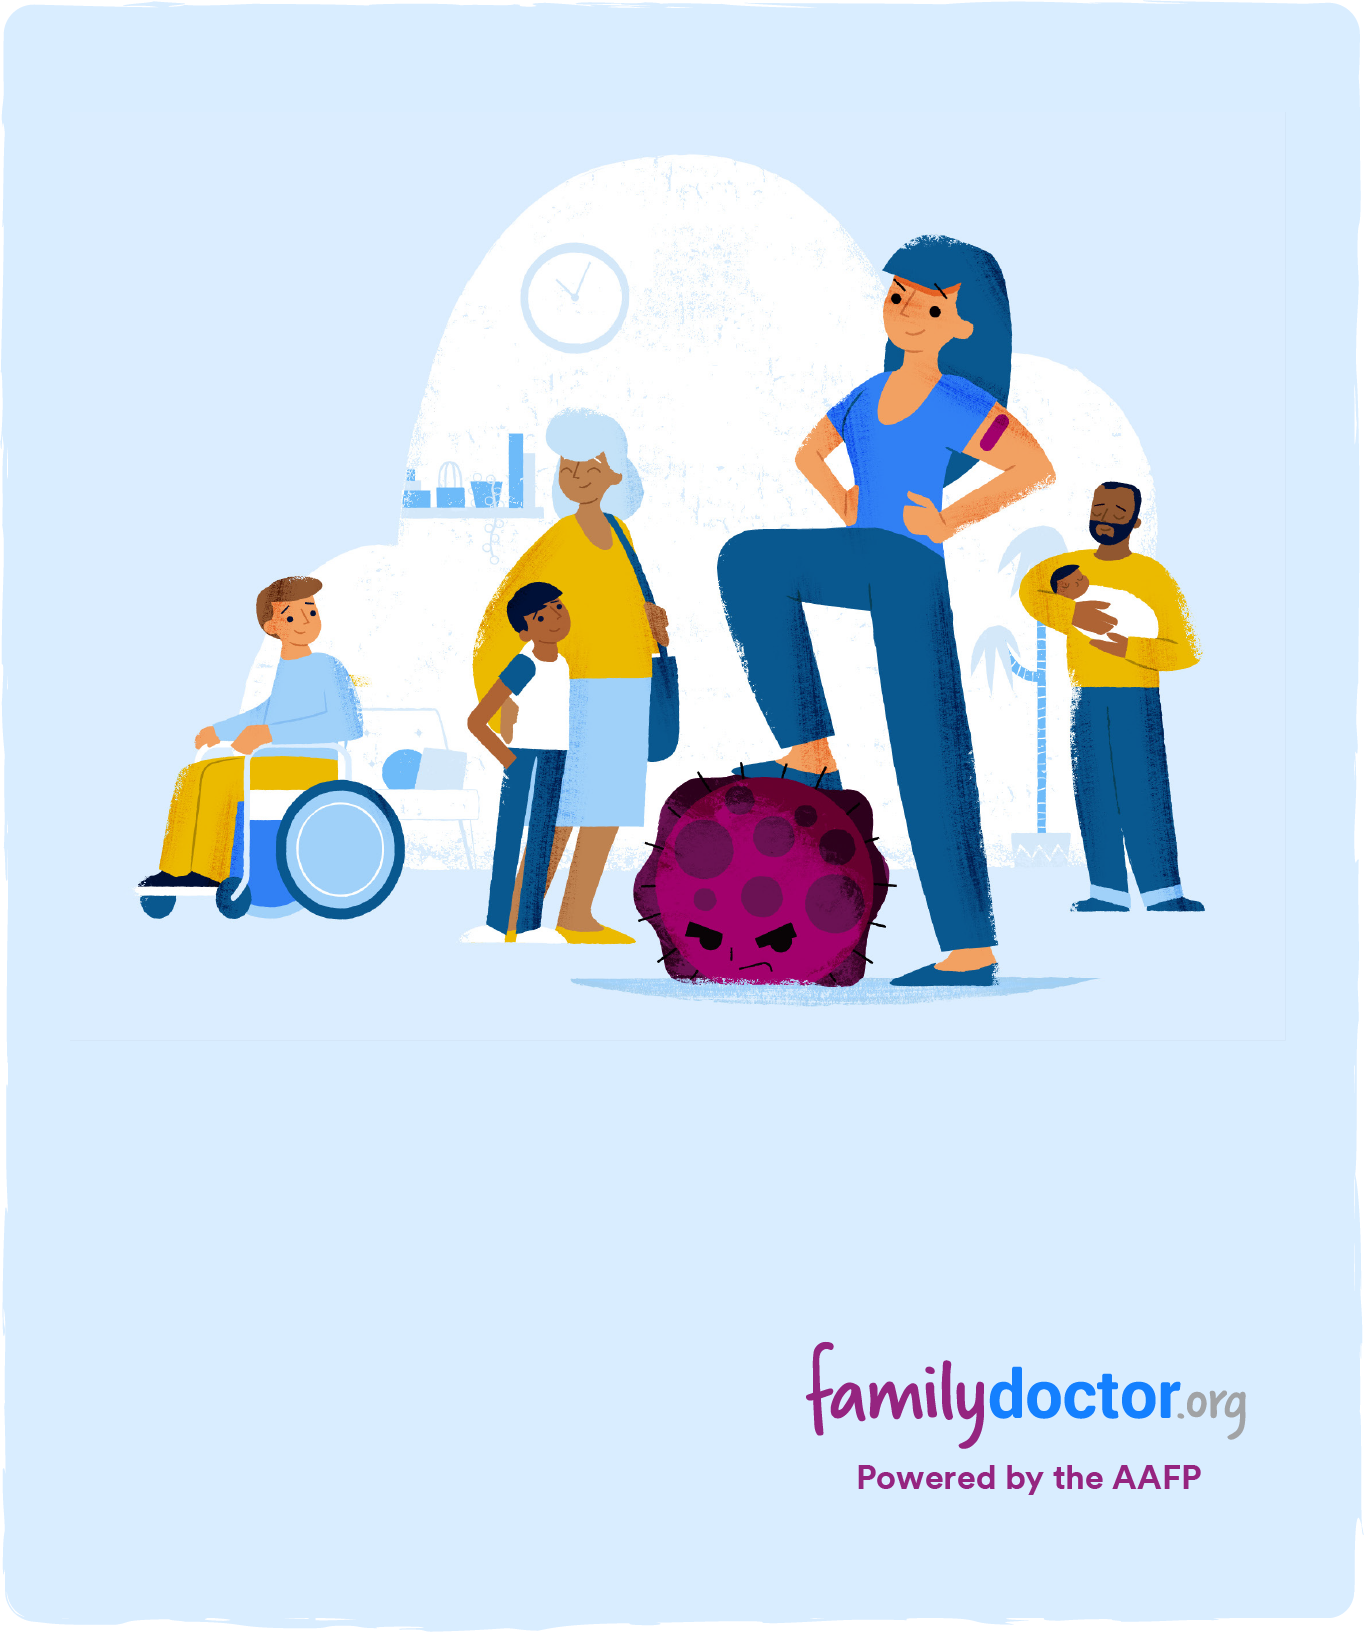 FamilyDoctor.org Vaccine Education